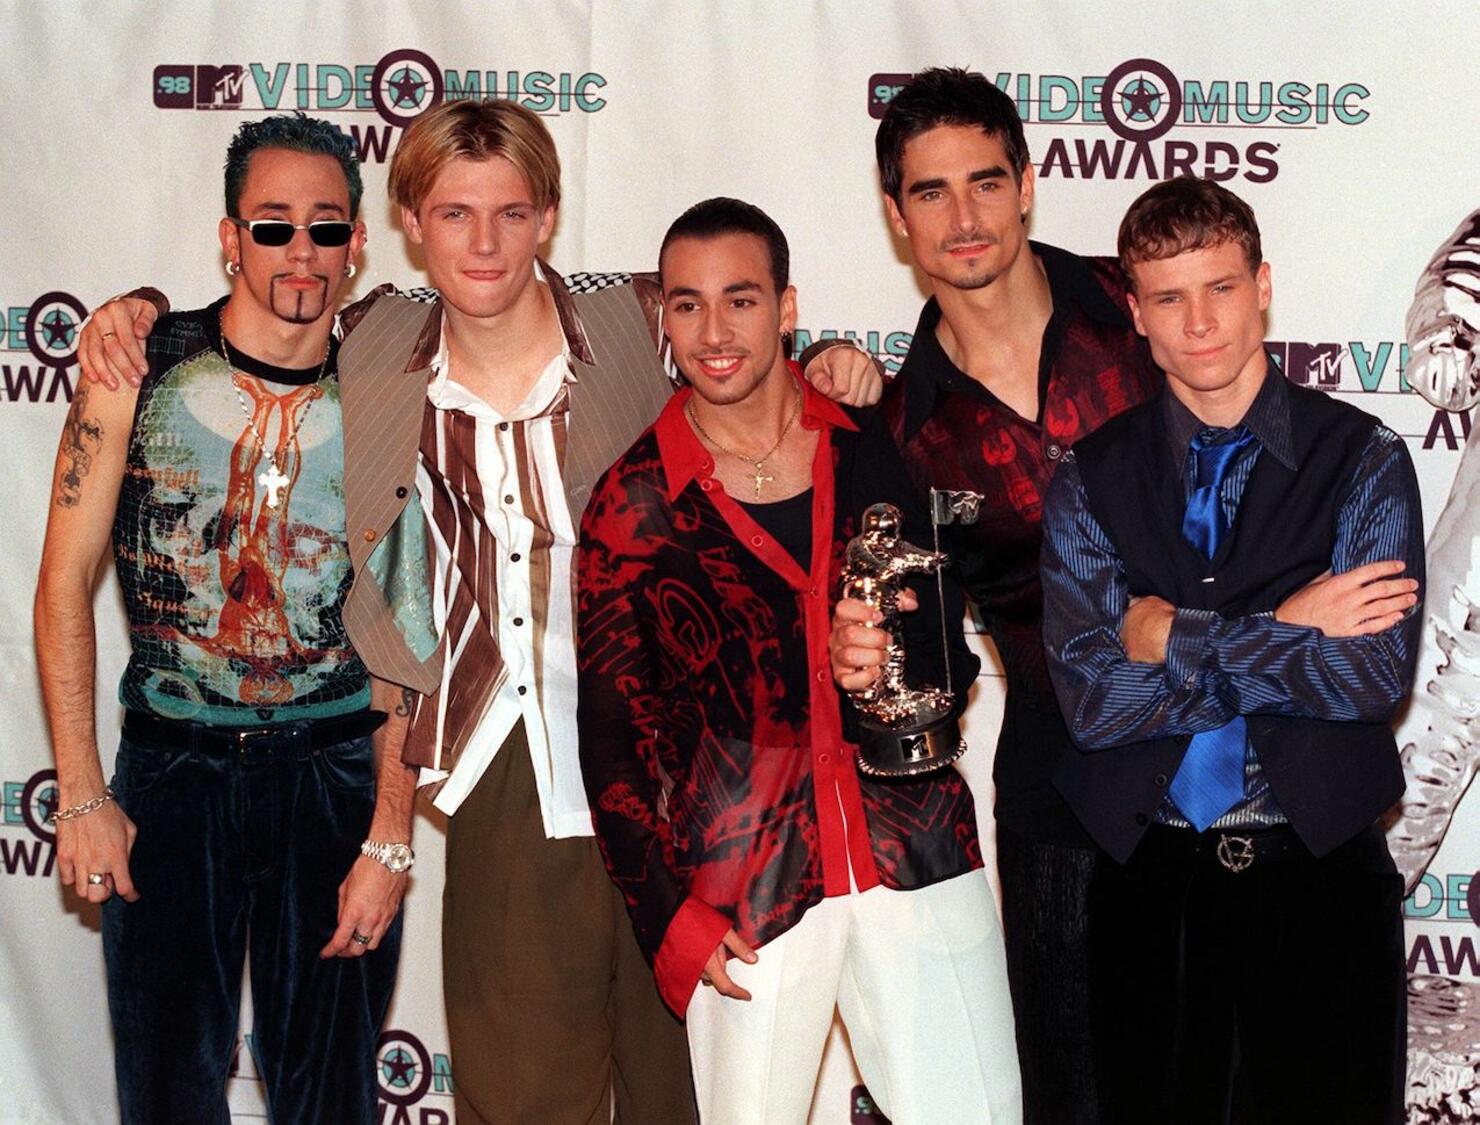 Members of the musical group Backstreet Boys pose